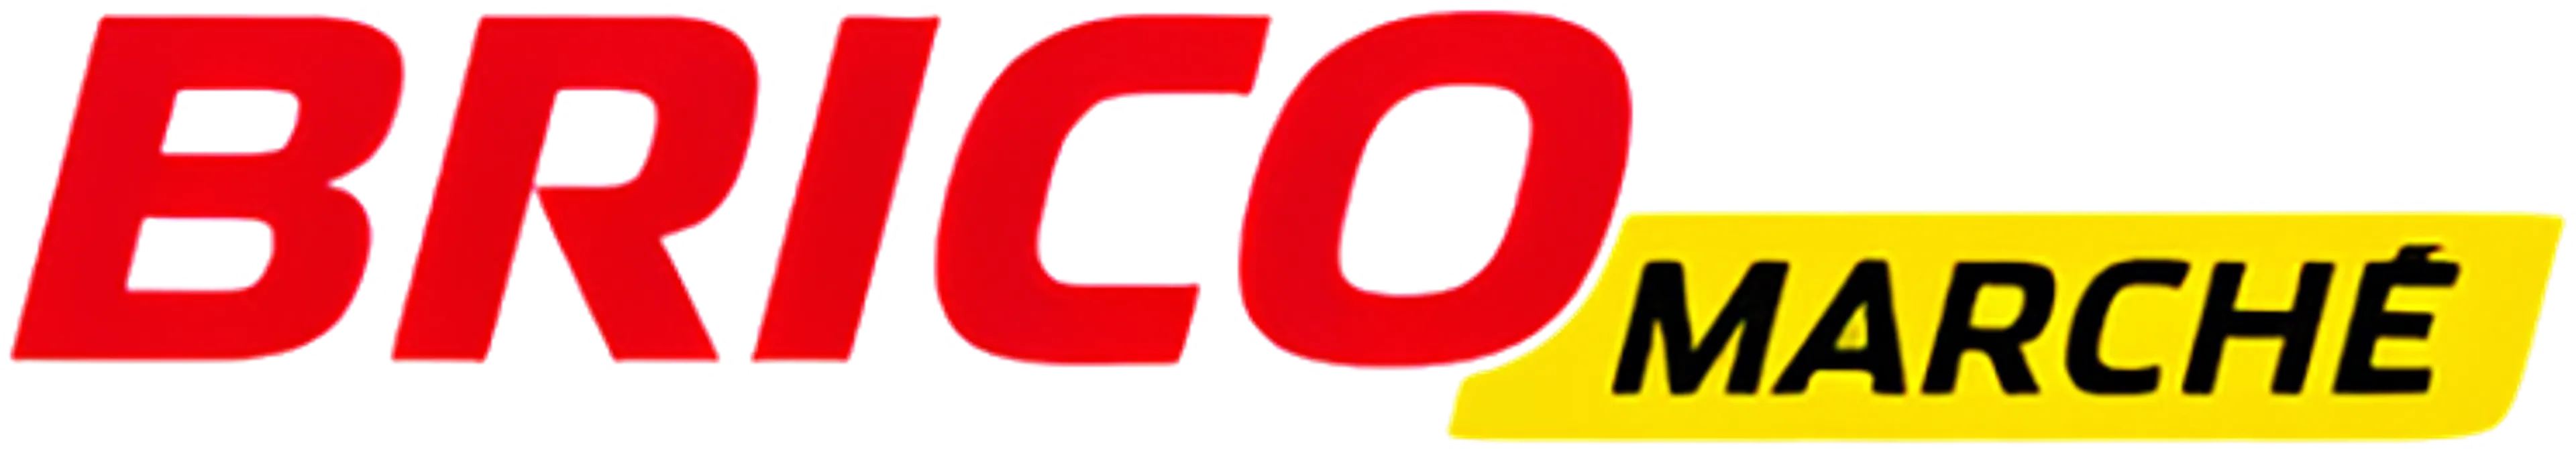 BRICOMARCHÉ logo